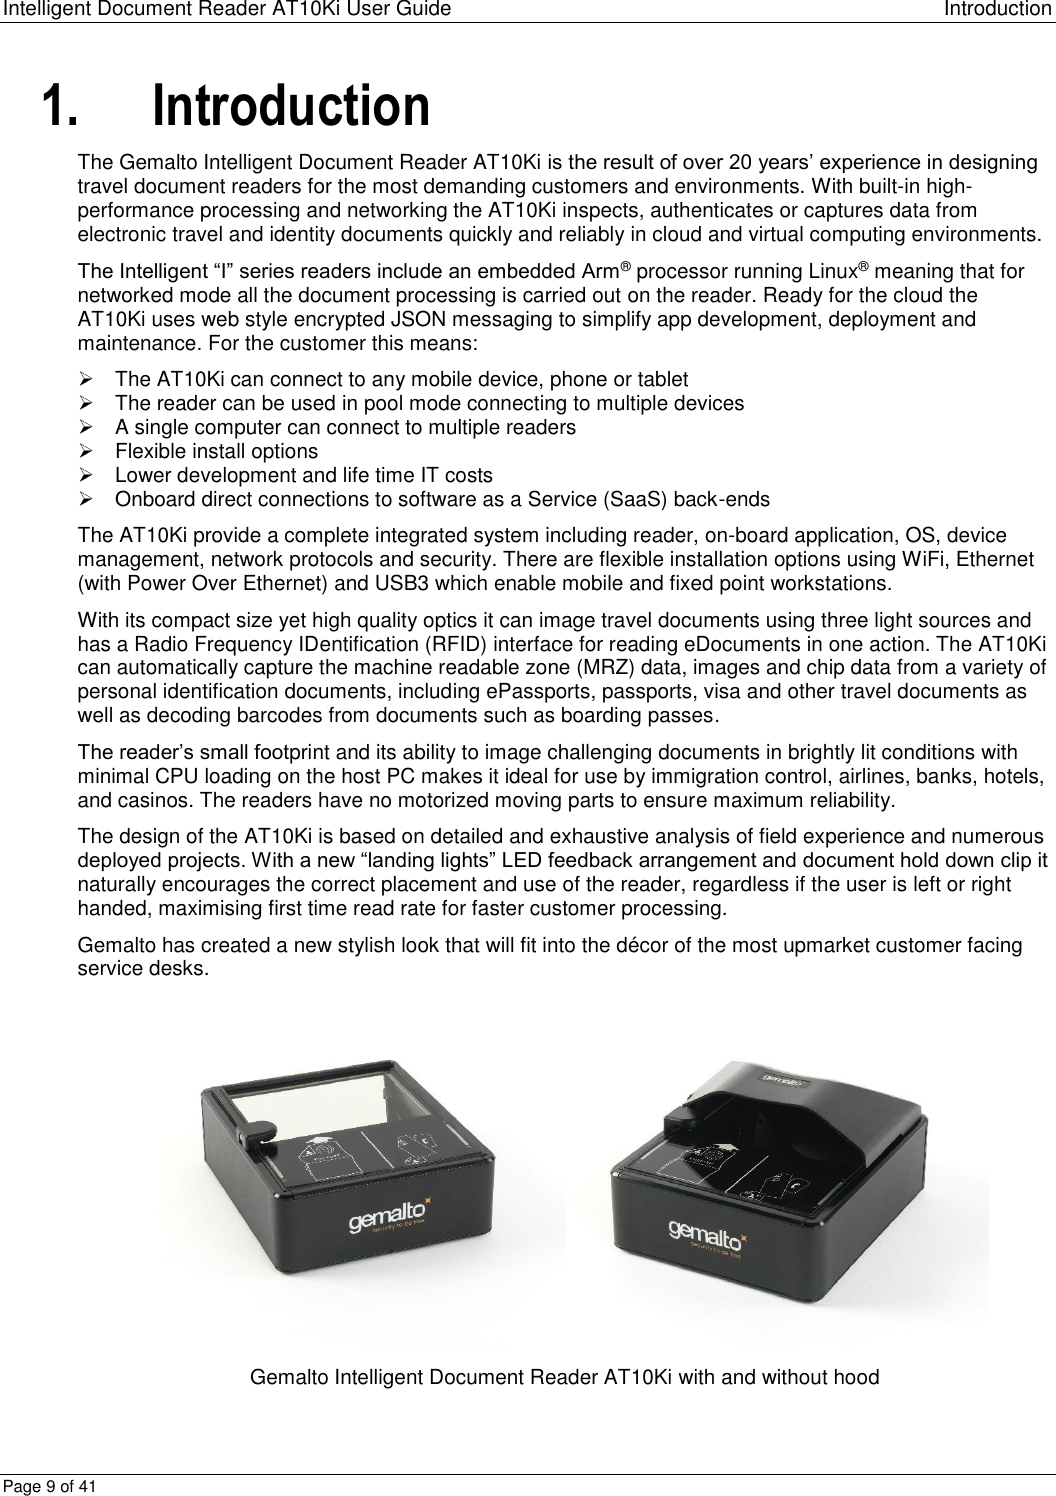 Page 9 of Thales DIS USA PR01523 ation Scanner User Manual